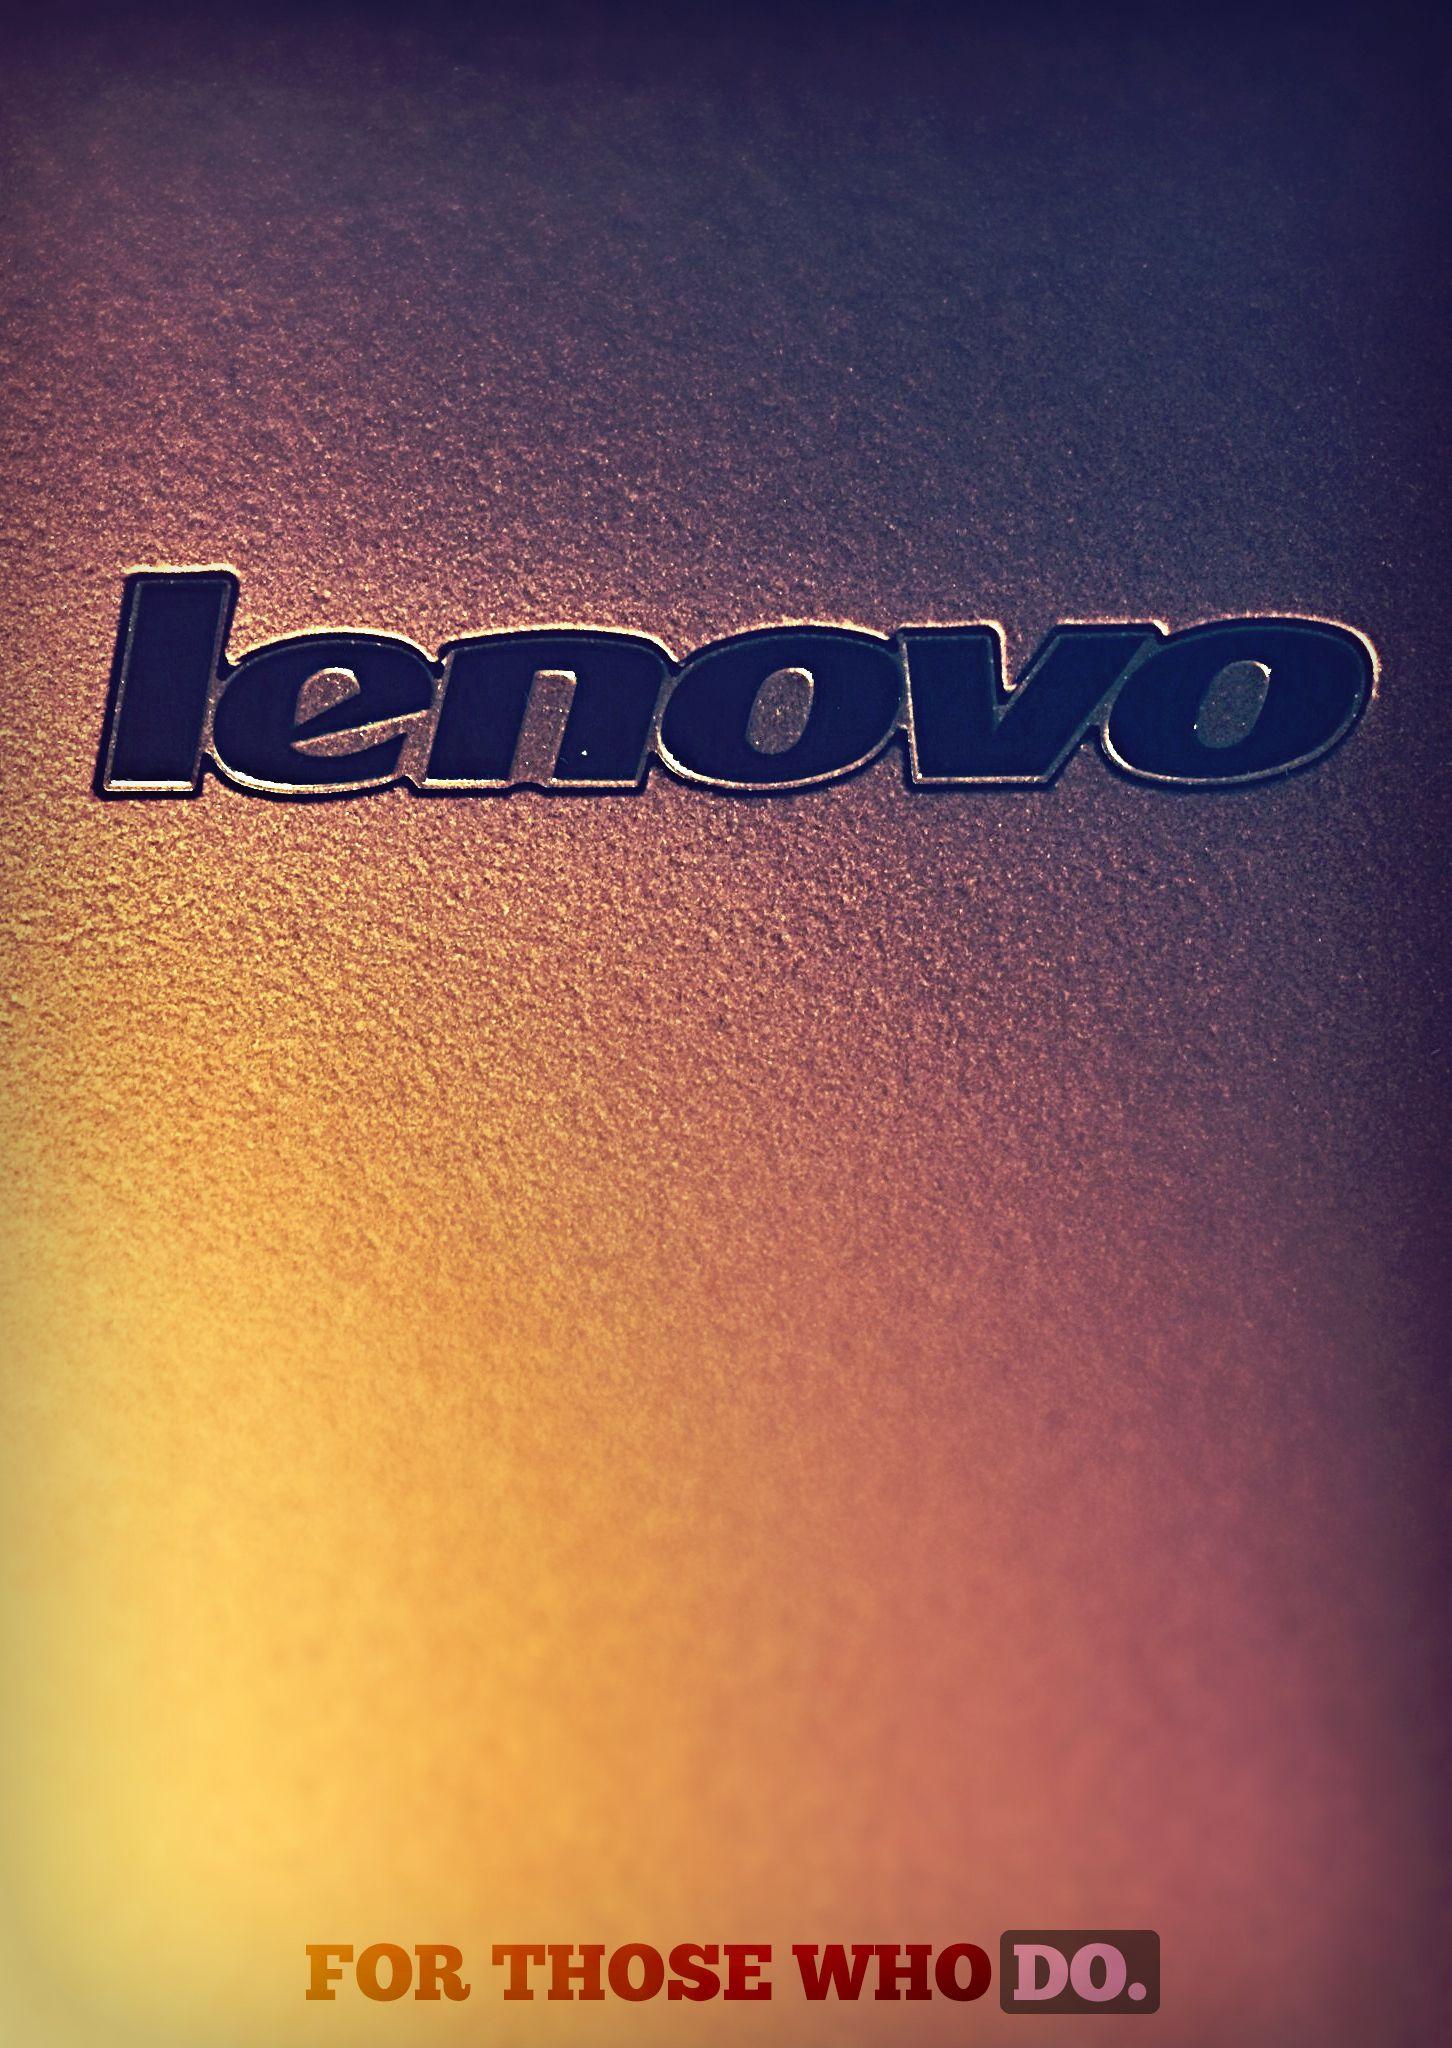 HD Lenovo Mobile Wallpapers  Wallpaper Cave